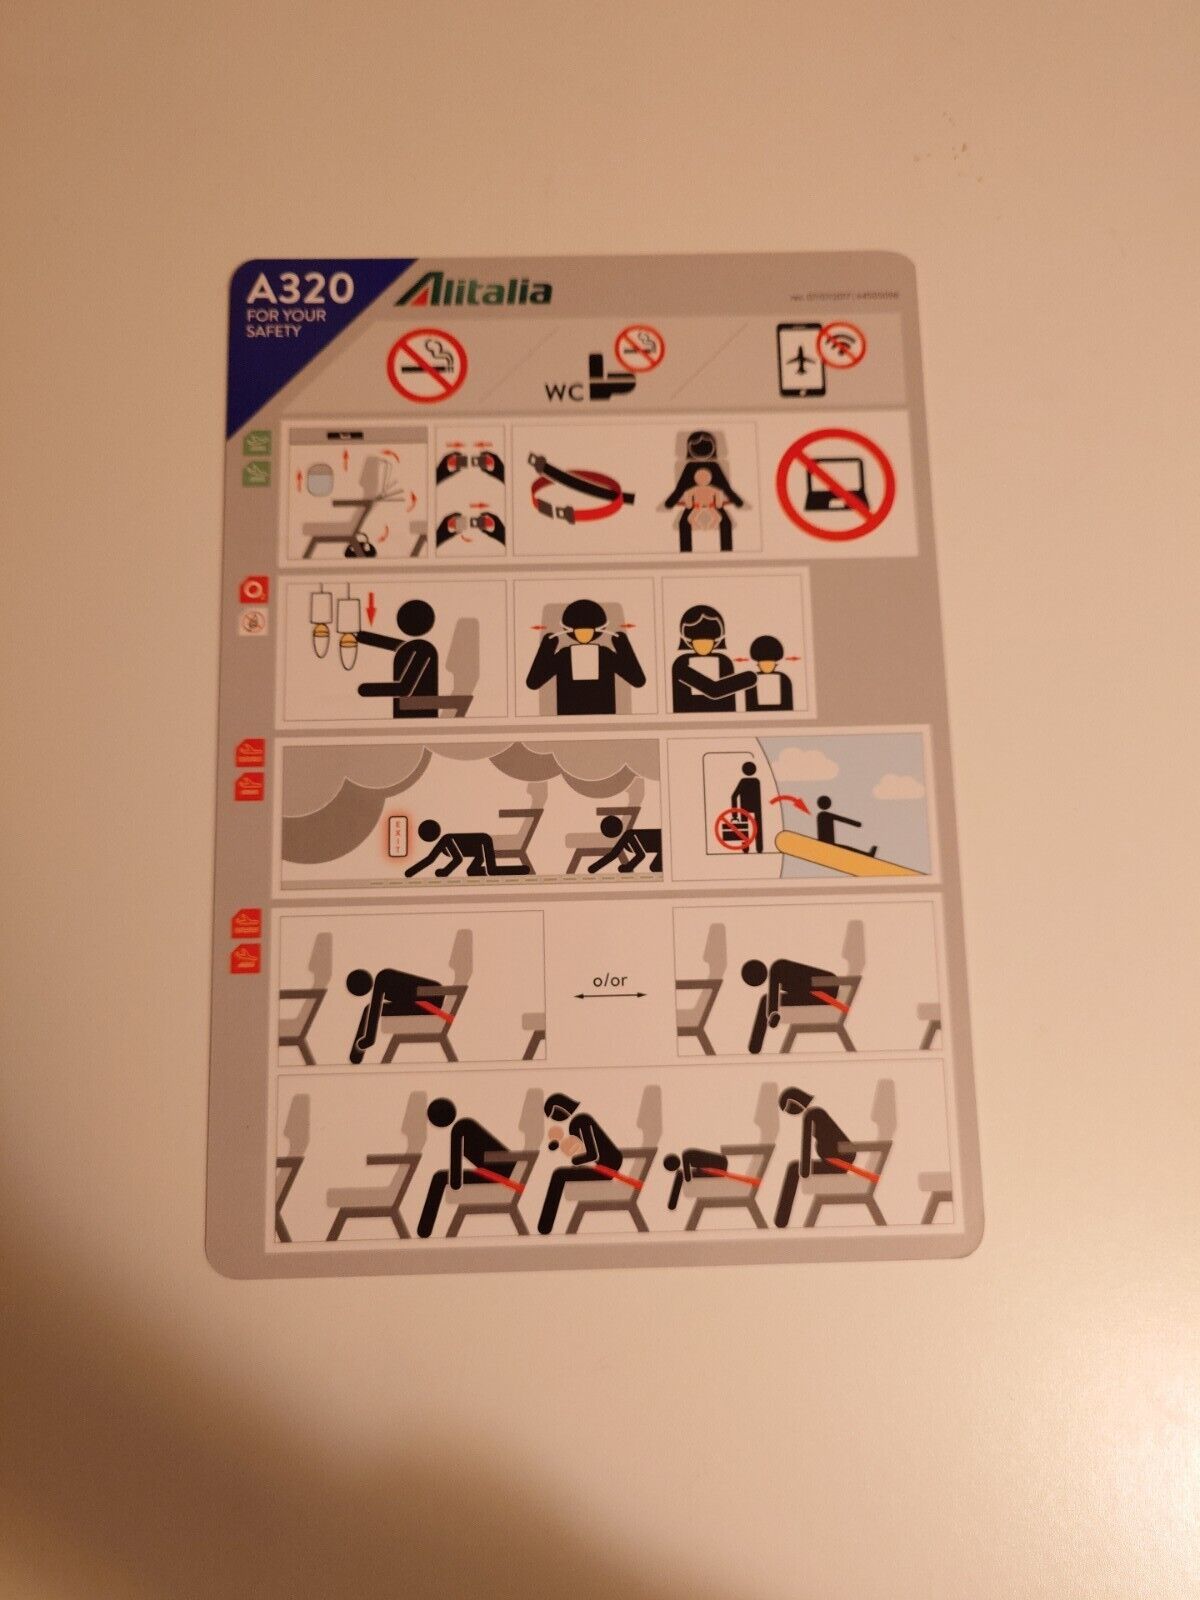 Alitalia Airbus A320 07/07/2017 Safety Card